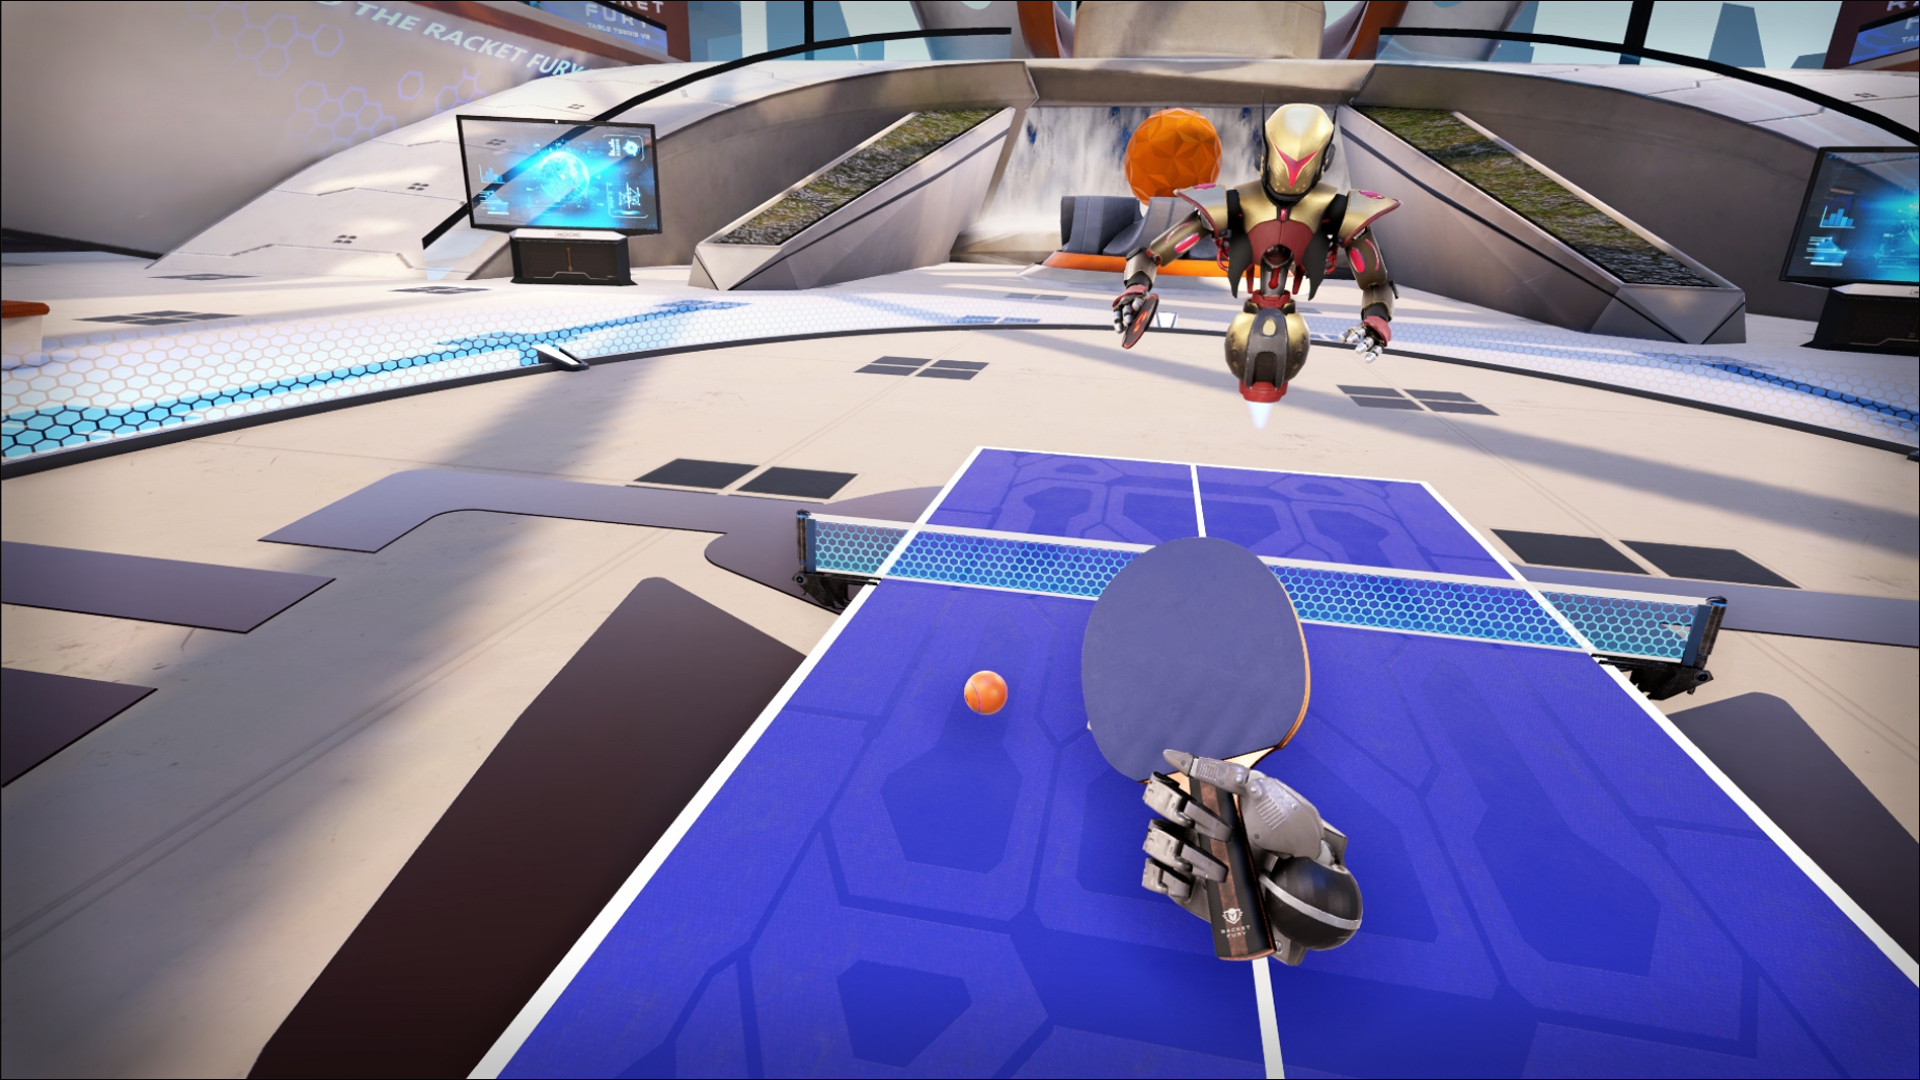 Racket Fury: Table Tennis VR screenshot